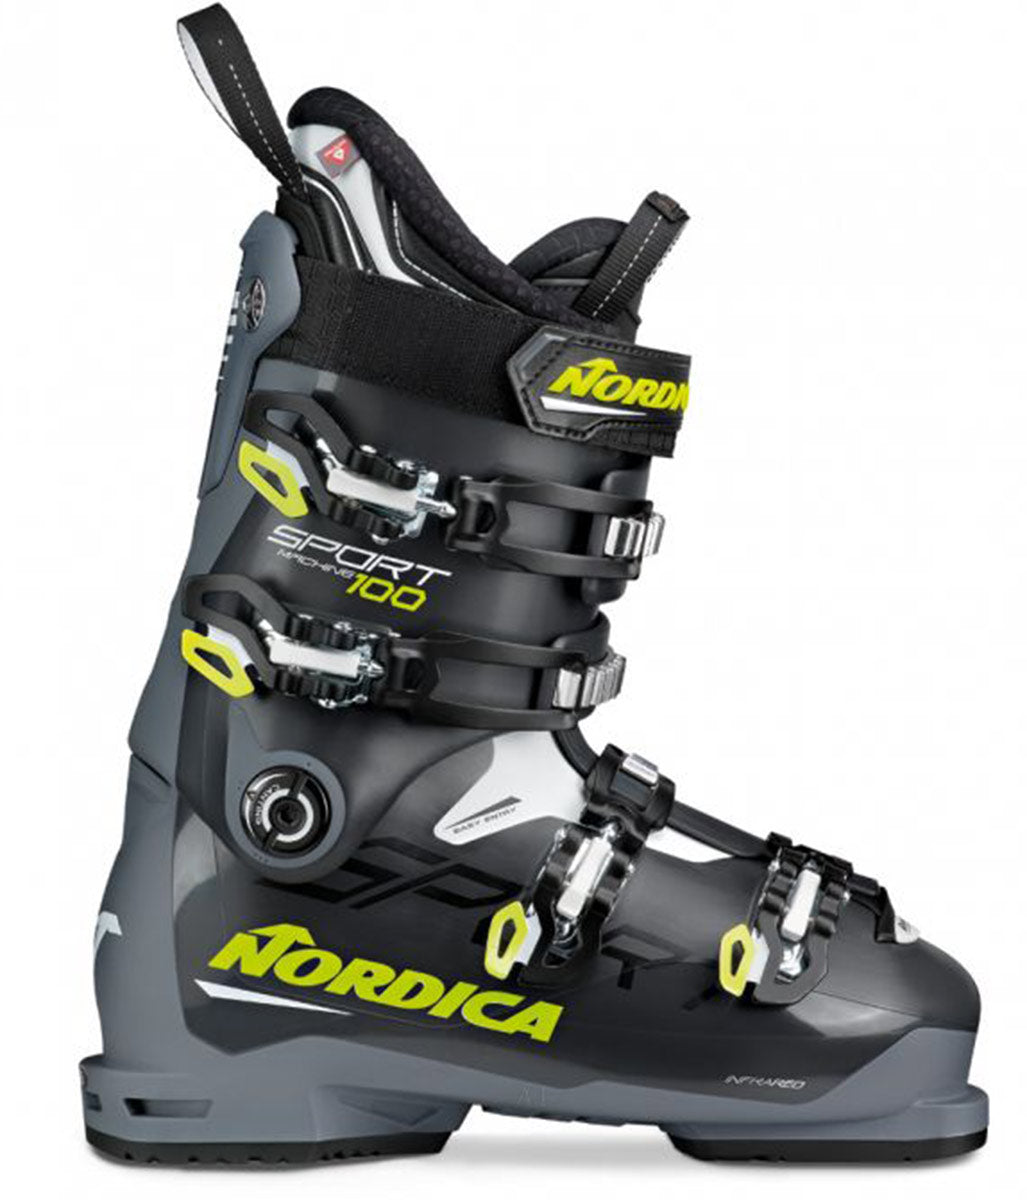 nordica-sportmachine-100-ski-boots-2021